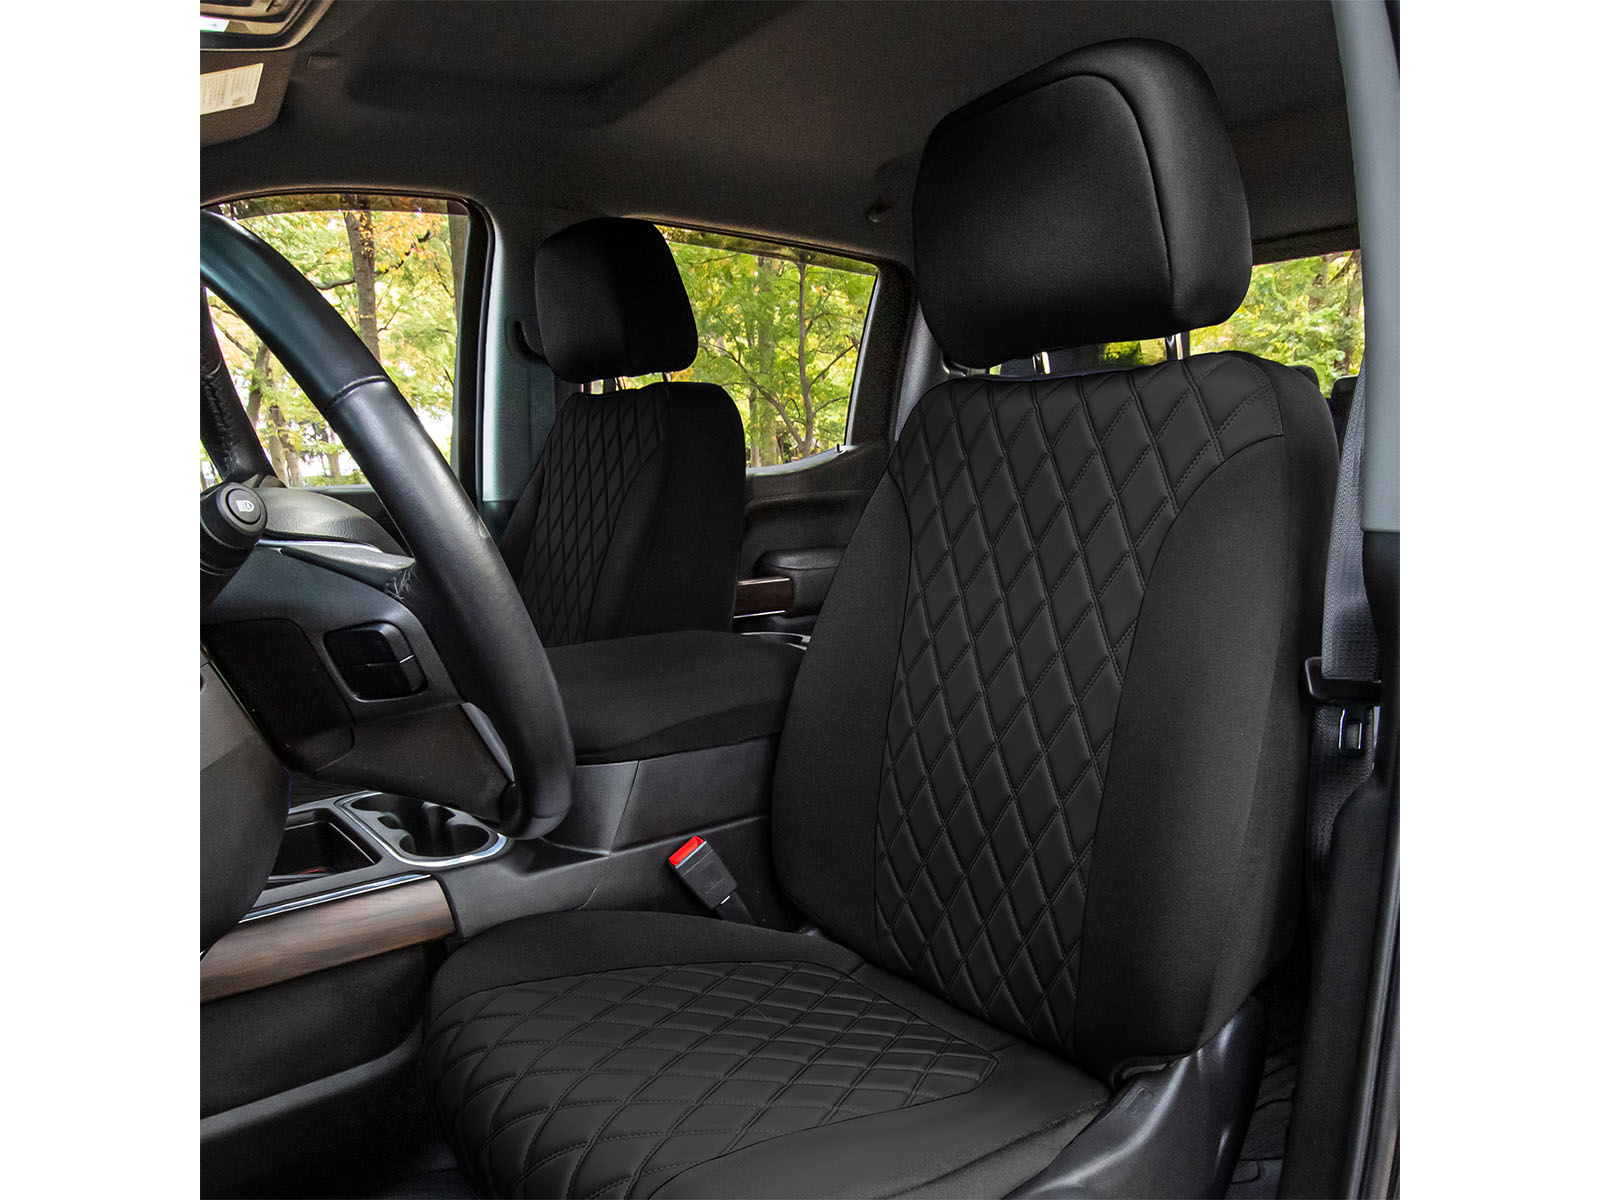 2021 GMC Sierra 1500 Seat Covers RealTruck